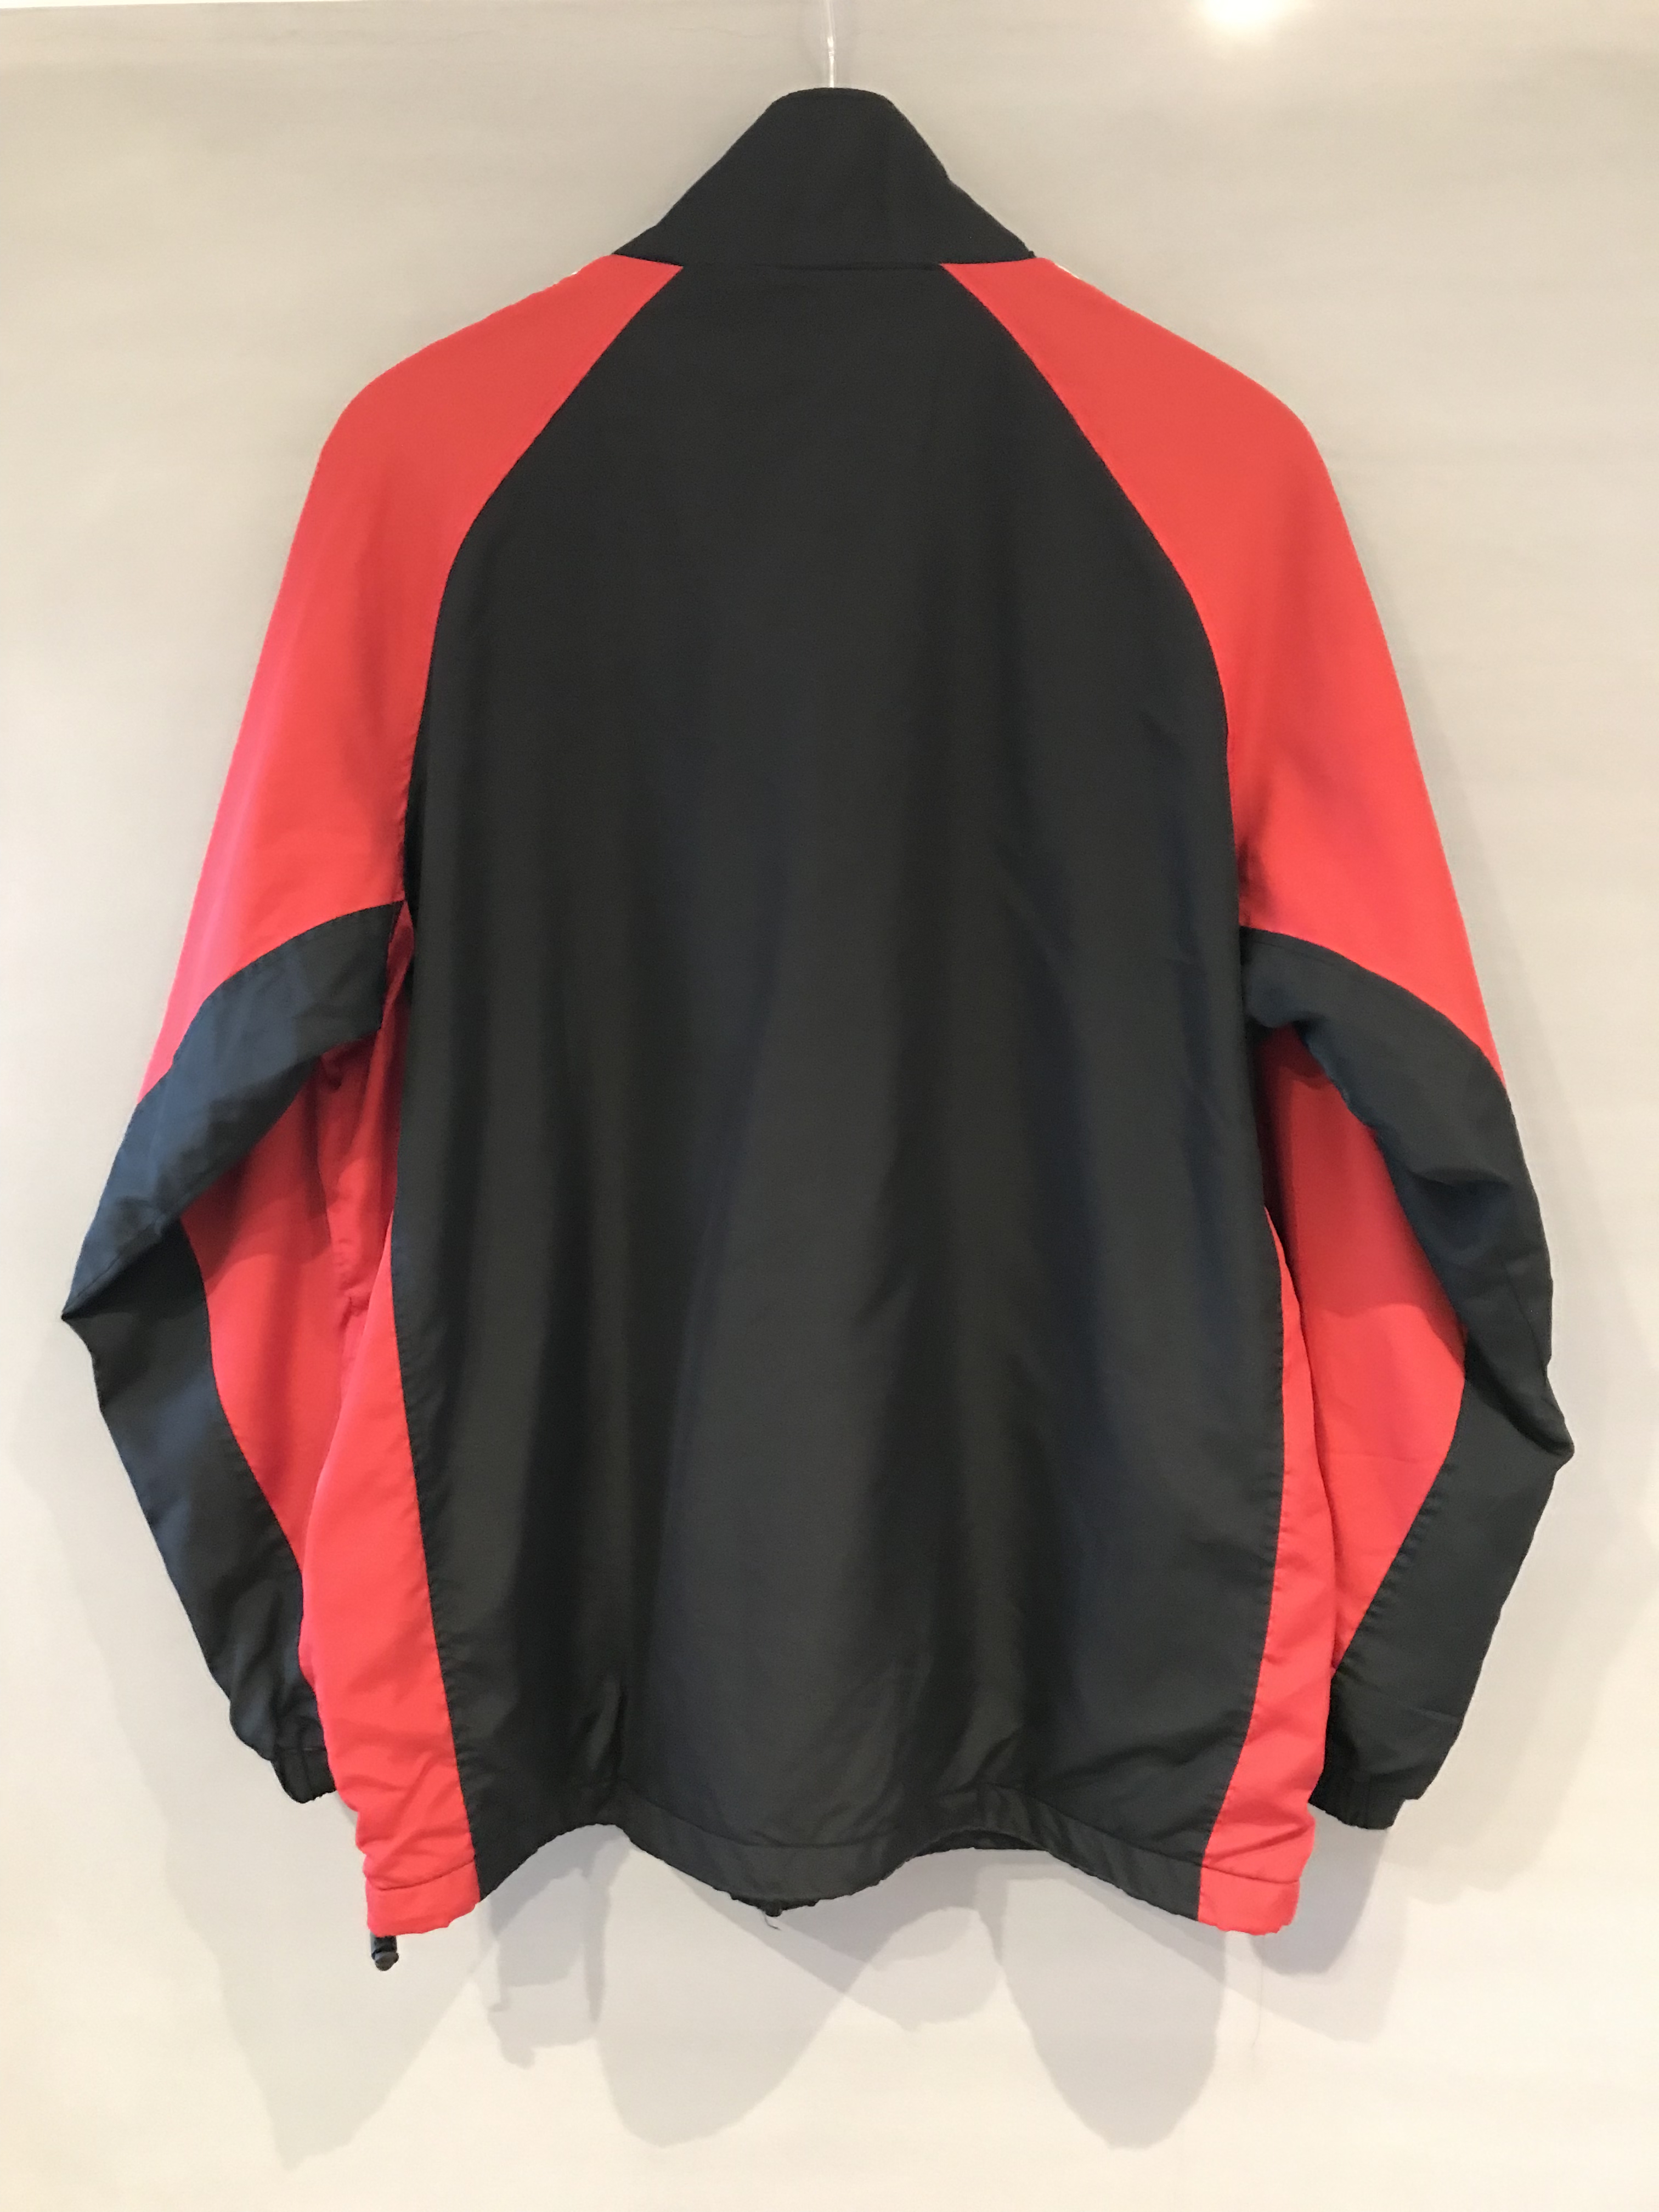 NIKE 中綿 ナイロンジャケット  赤×黒 Lサイズ